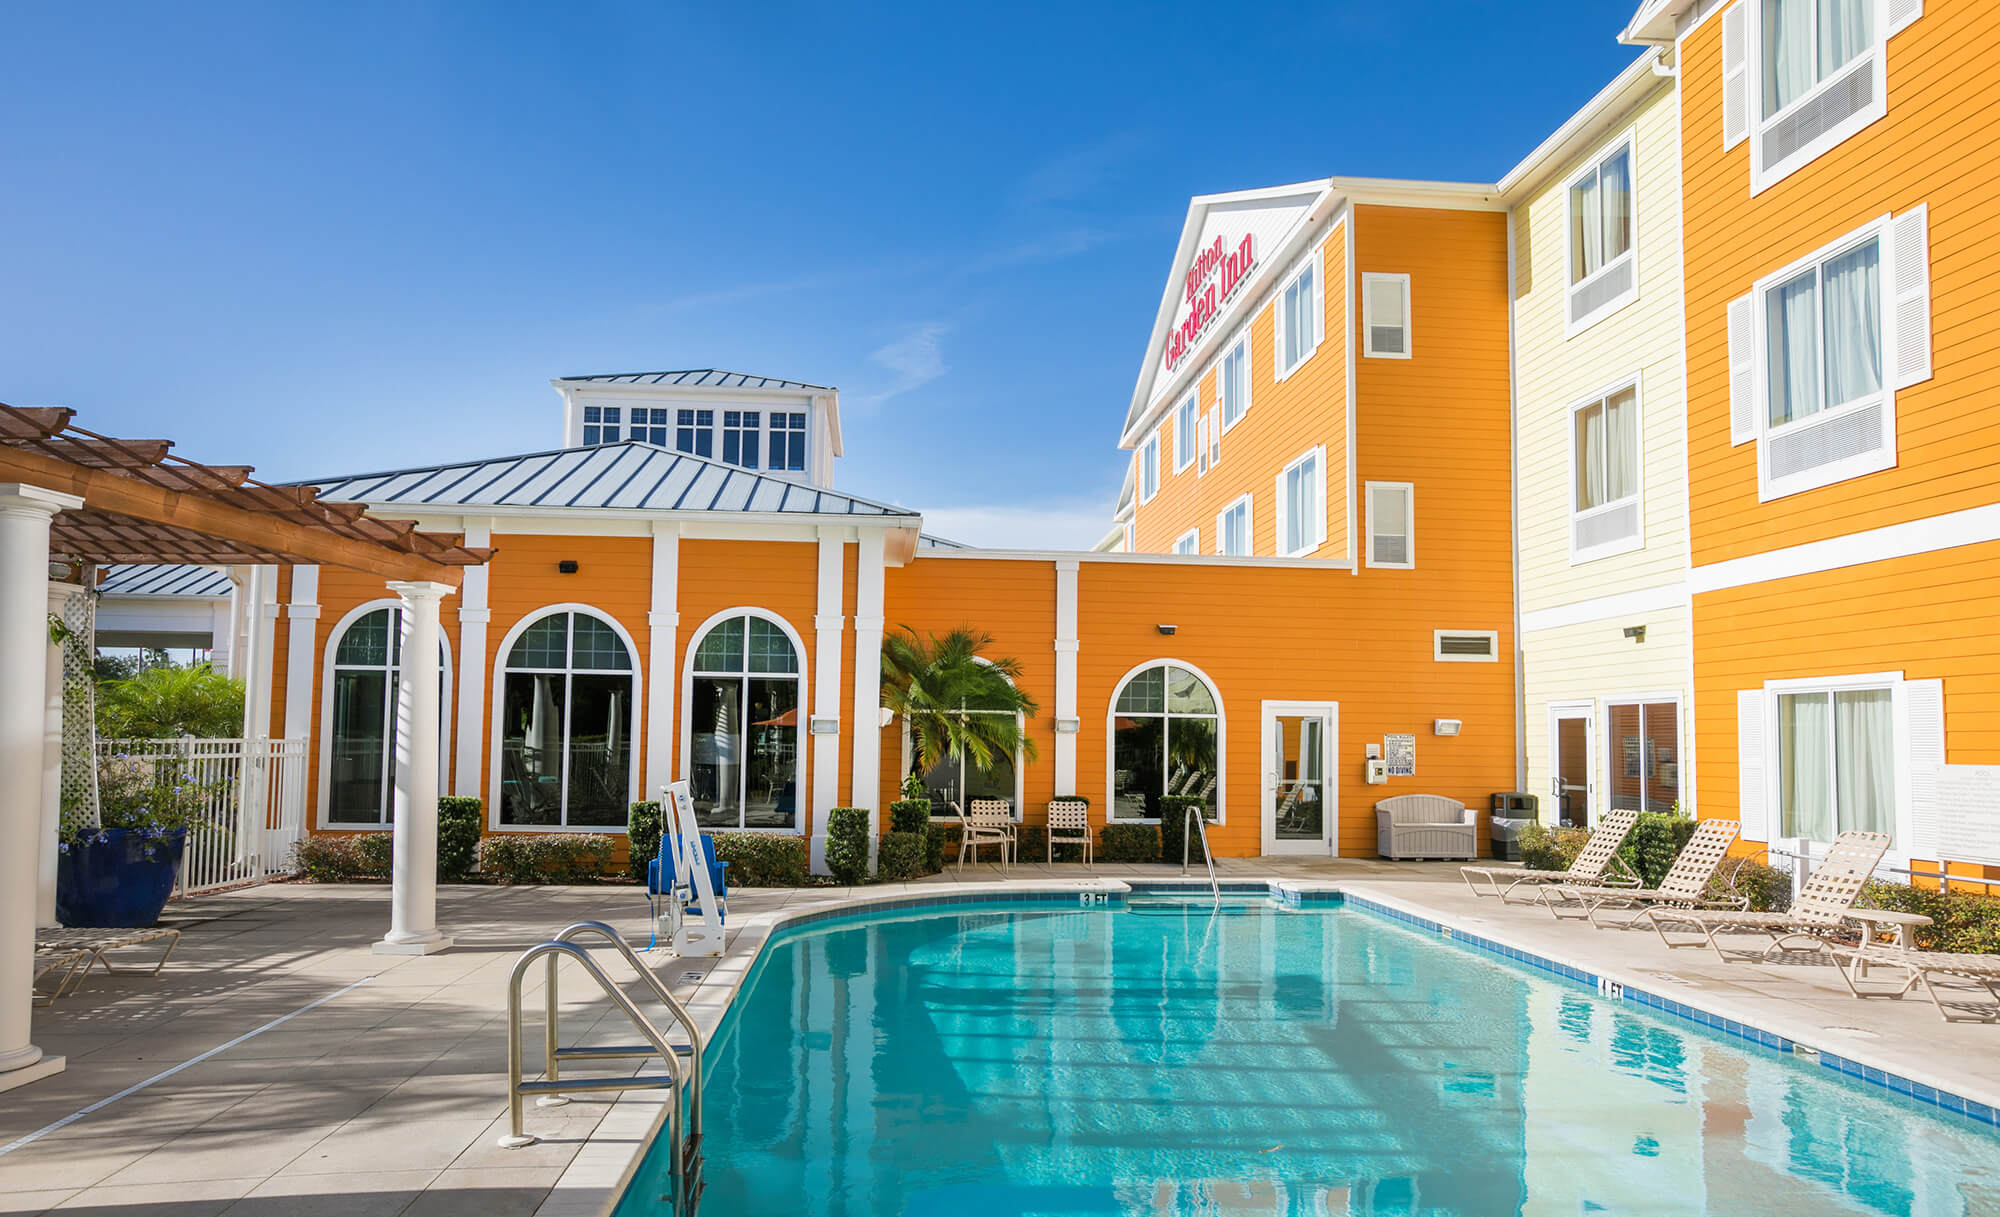 Pool and hotel exterior at Hilton Garden Inn Lakeland